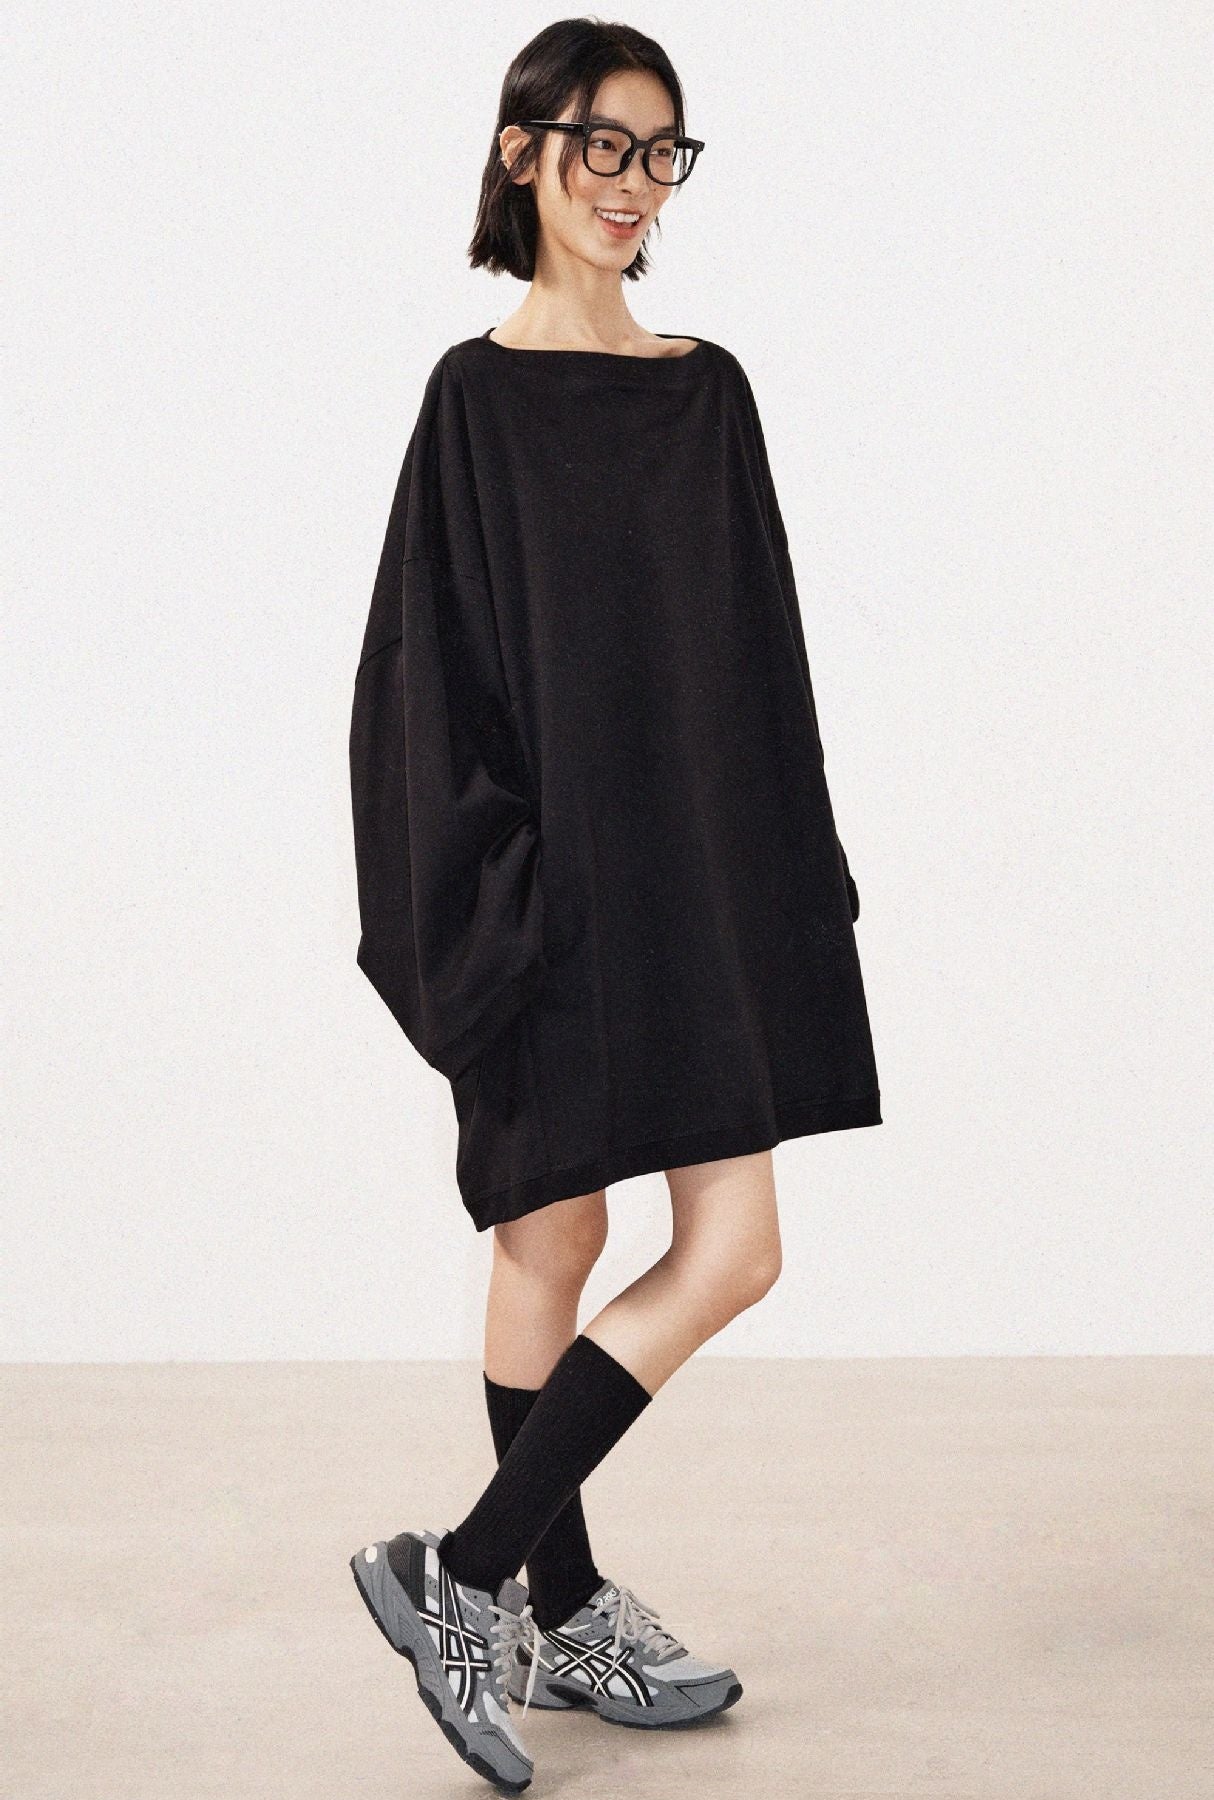 Pure cotton silhouette pullover T-shirt_BDHL5810